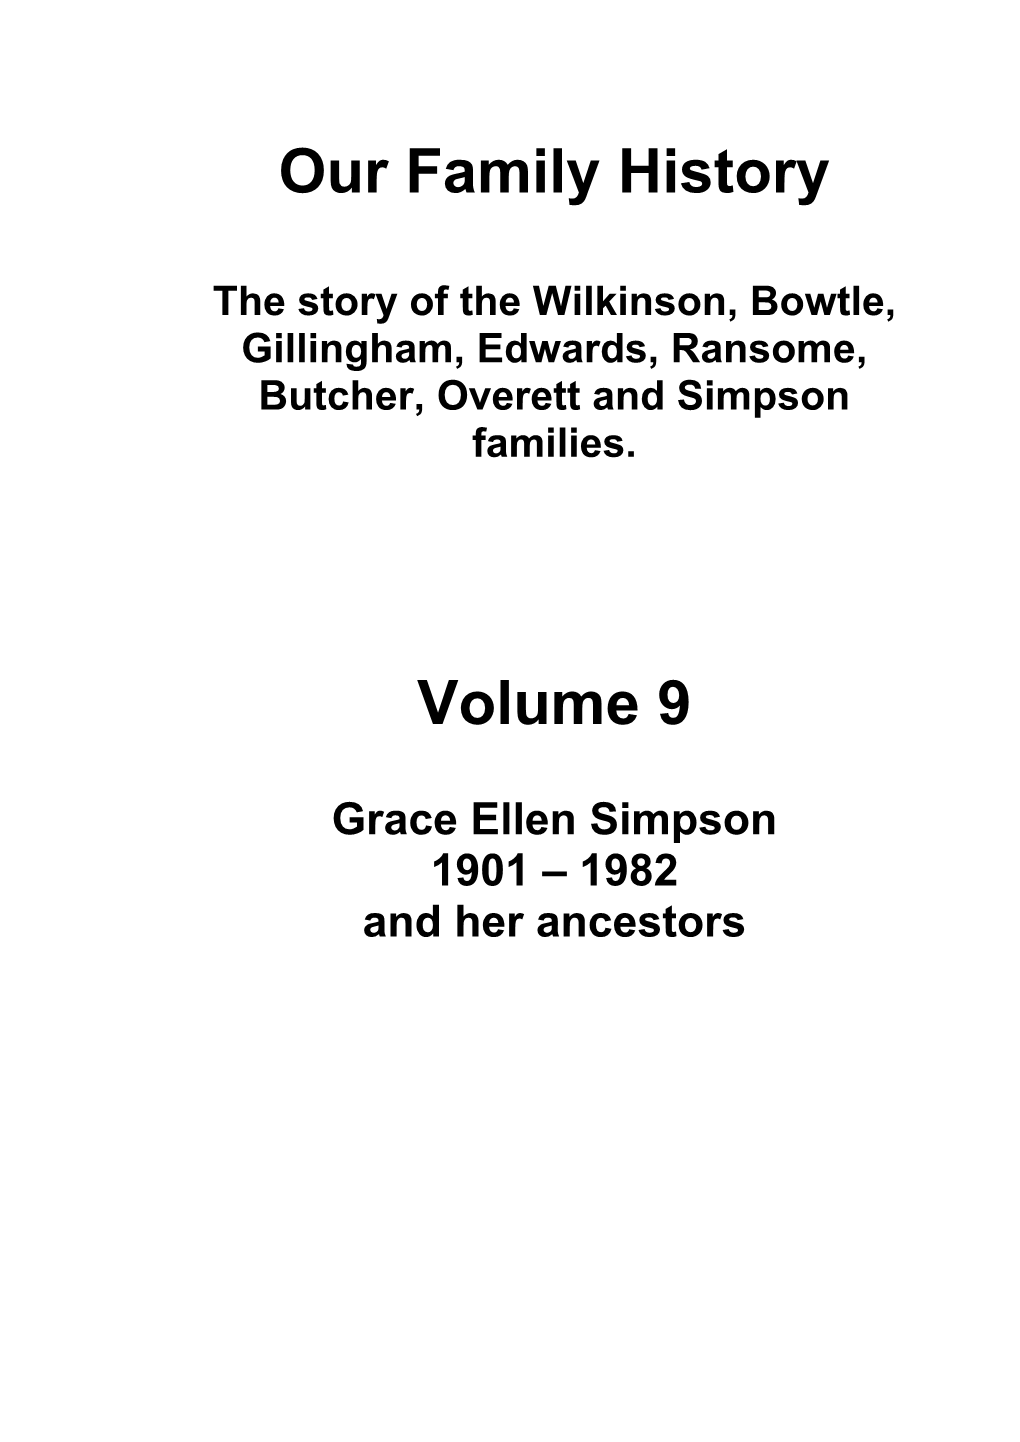 Grace Ellen Simpson and Her Ancestors